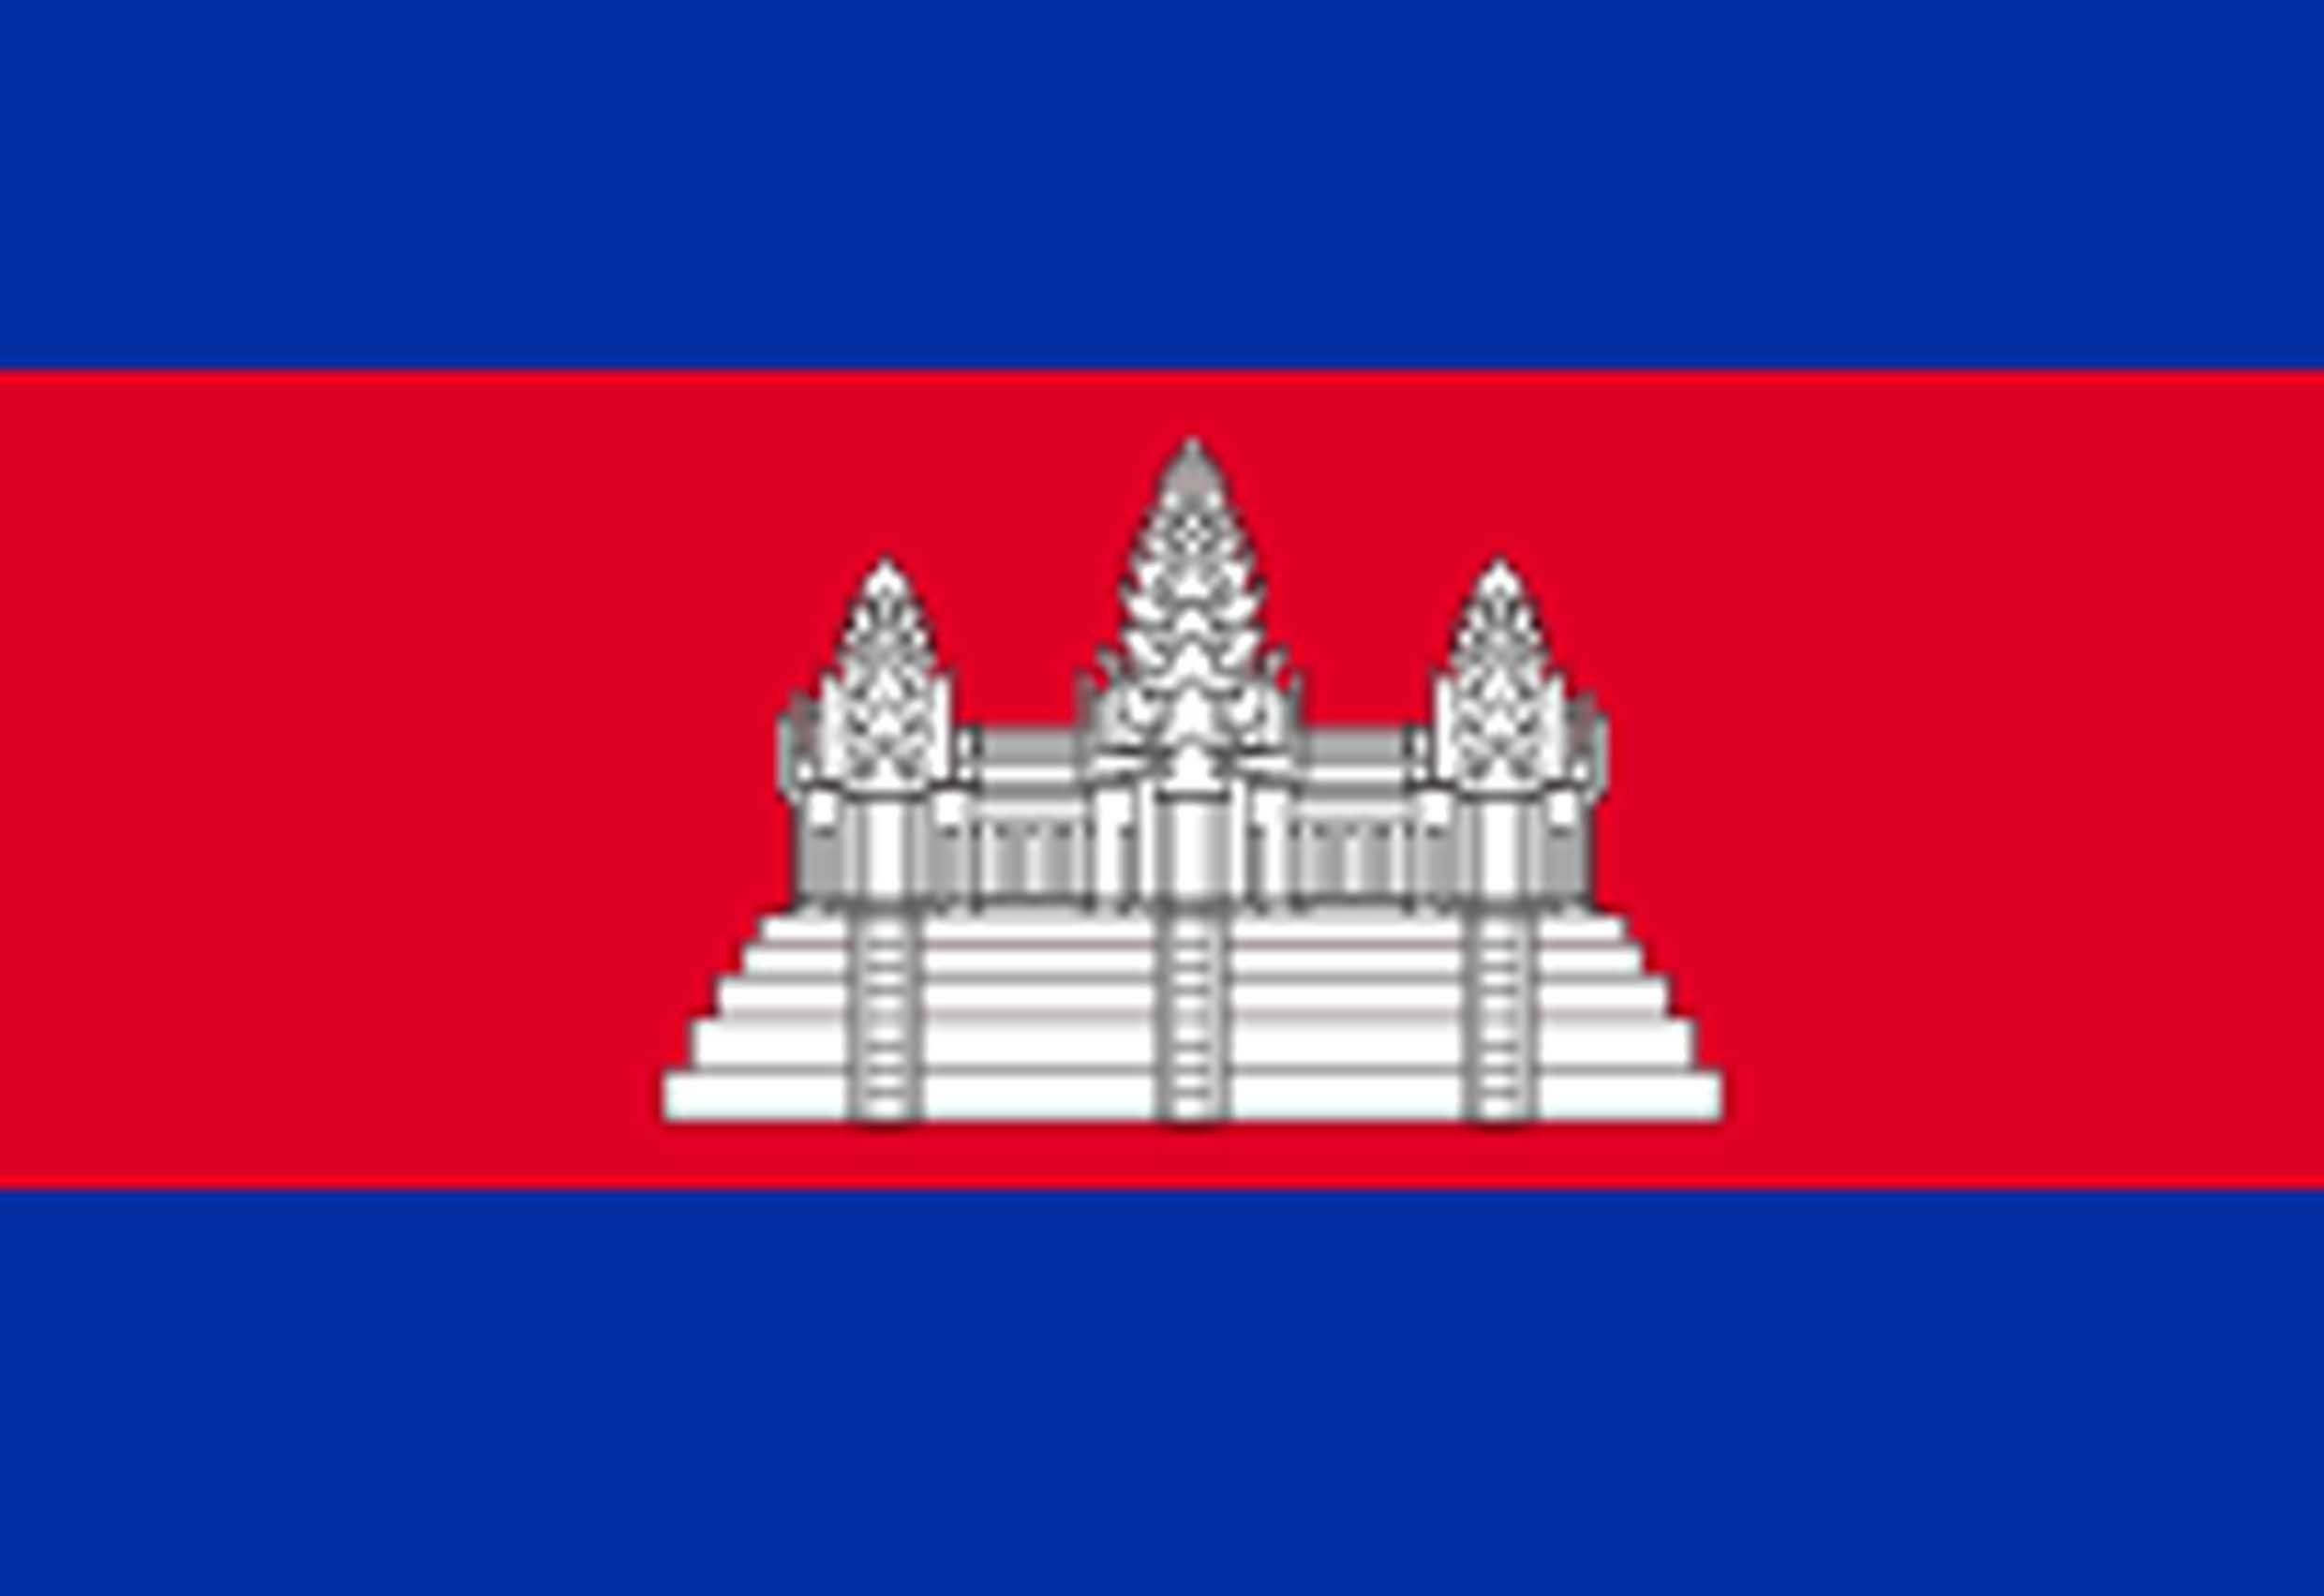 Cambodge.jpg